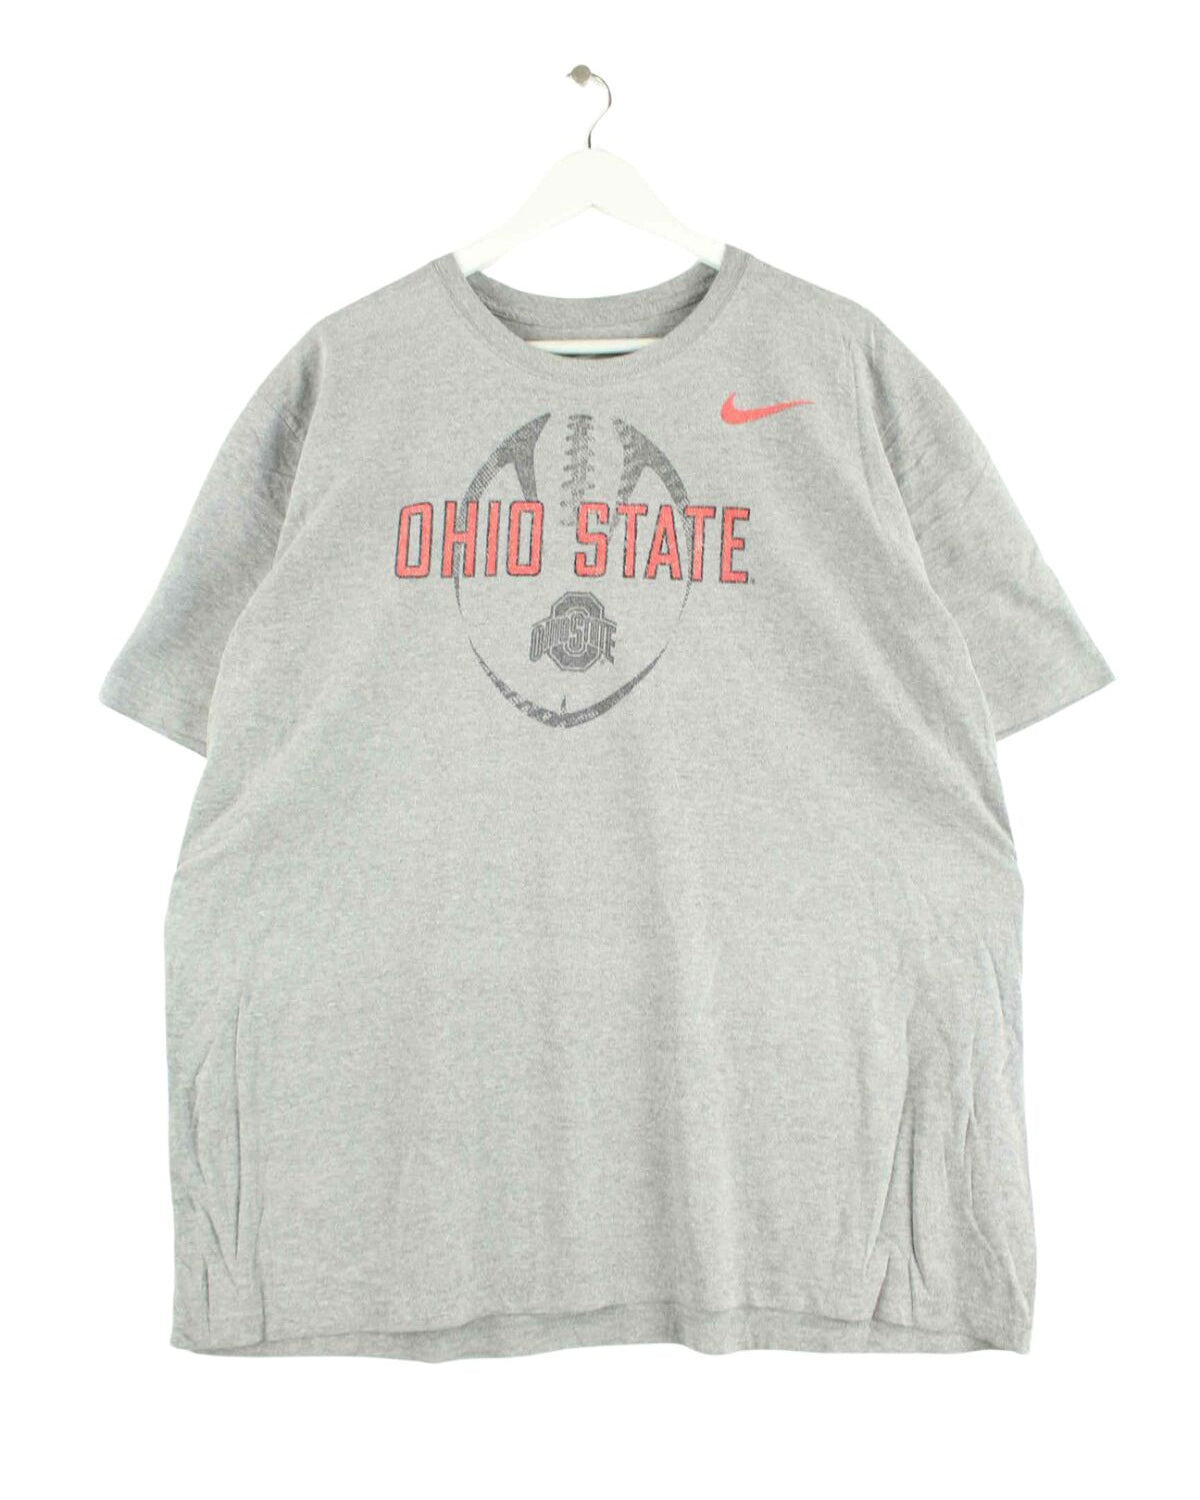 Nike Ohio State Print T-Shirt Grau XXL (front image)